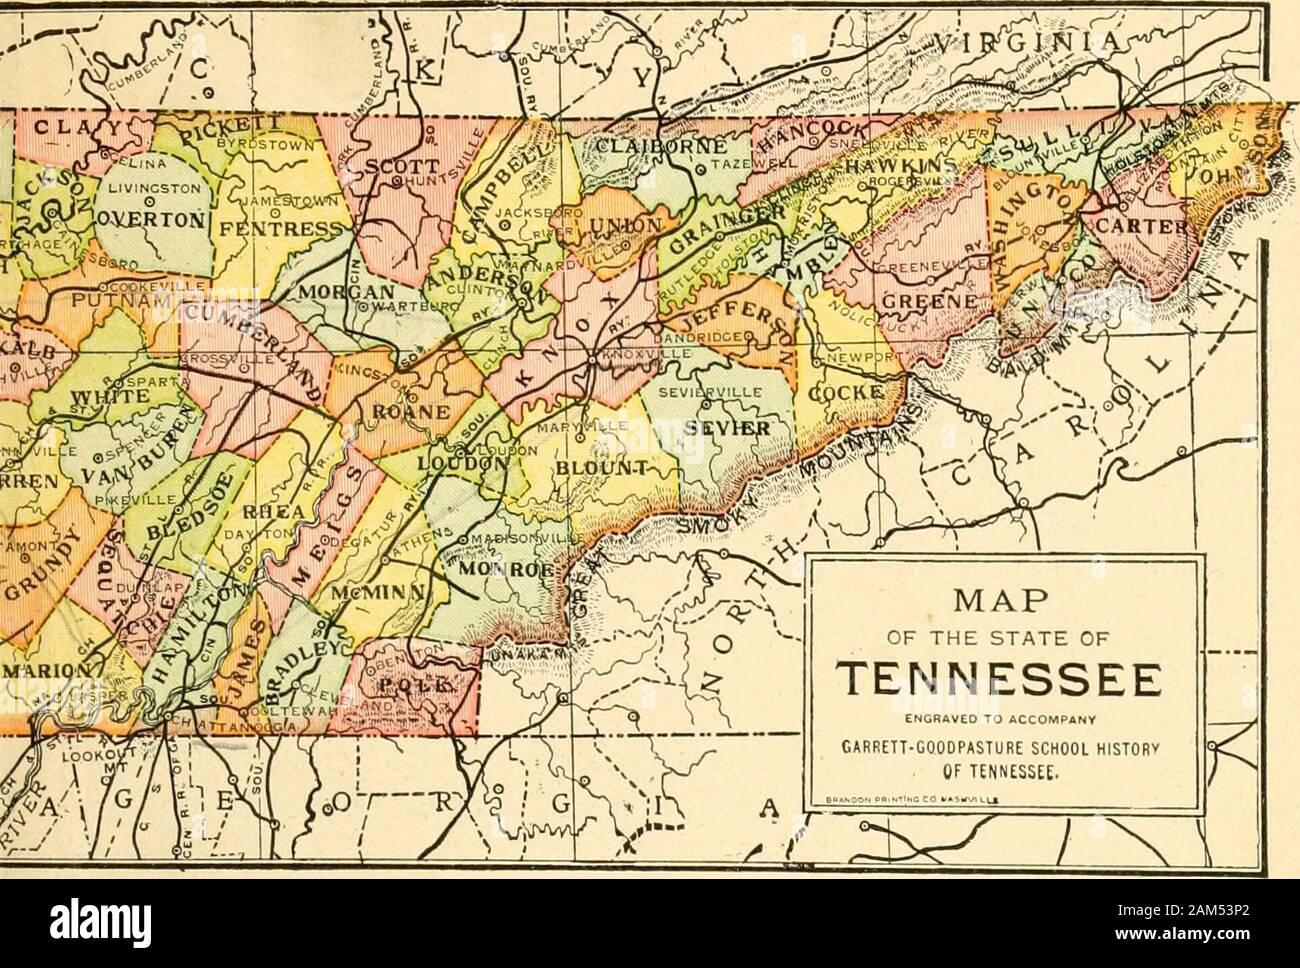 History of Tennessee, its people and its institutions . Johnson....Knox CouJSTY Seat. Jamestown ..Winchester... Trenton Pulaski Rutledge Greeneville ..Altamont ....Morristown ..Chattanooga . Sneedville Bolivar Savannah ....Rogersville...Brownsville ..Lexington.... Paris Centreville Erin Waverly Gainesboro... Ooltewah Dandridge ...,Mountain CityKnoxville V n! «E A 1823180718231809179617831844187018191S44182 s18191/S6182.318211S211S071S71 ISOQ iSoi 1871 1792 IS351792 5,22118,92 35,8534,9513,1926,61. 6,34.11,41;53,4810 3421,02117,69; 22,2423,55 16,33 21,07 14,49 5,3911,7213,32, 4,9016,47 8,85;;59 Stock Photo